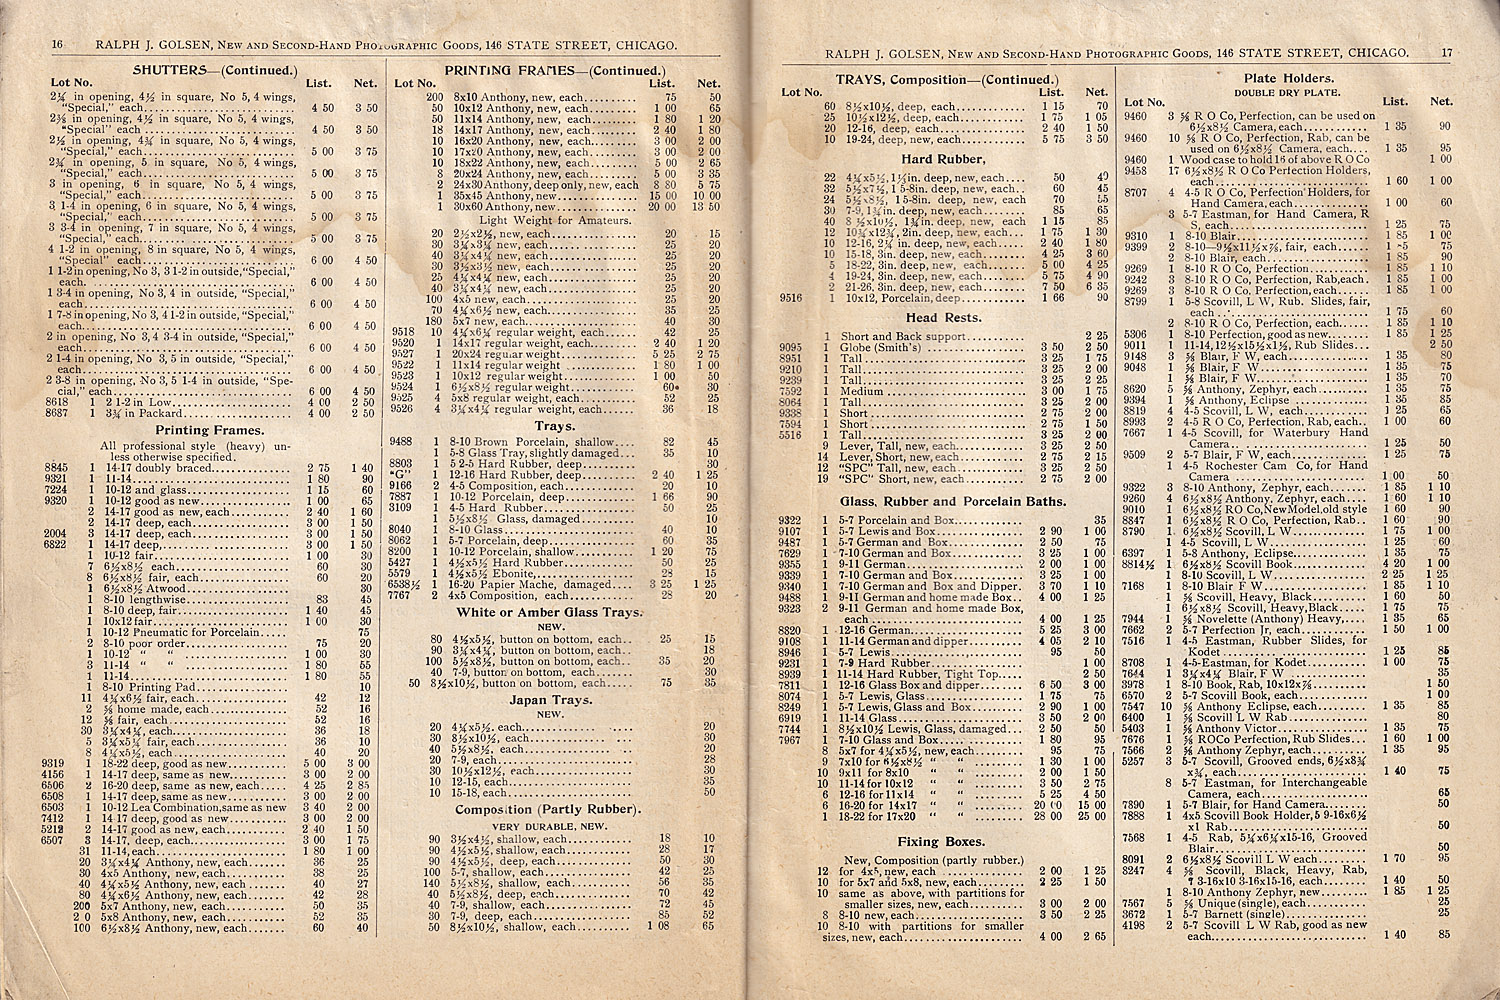 1118.golson.cat.&.bargain.list.no11.1898-16-17-1500.jpg